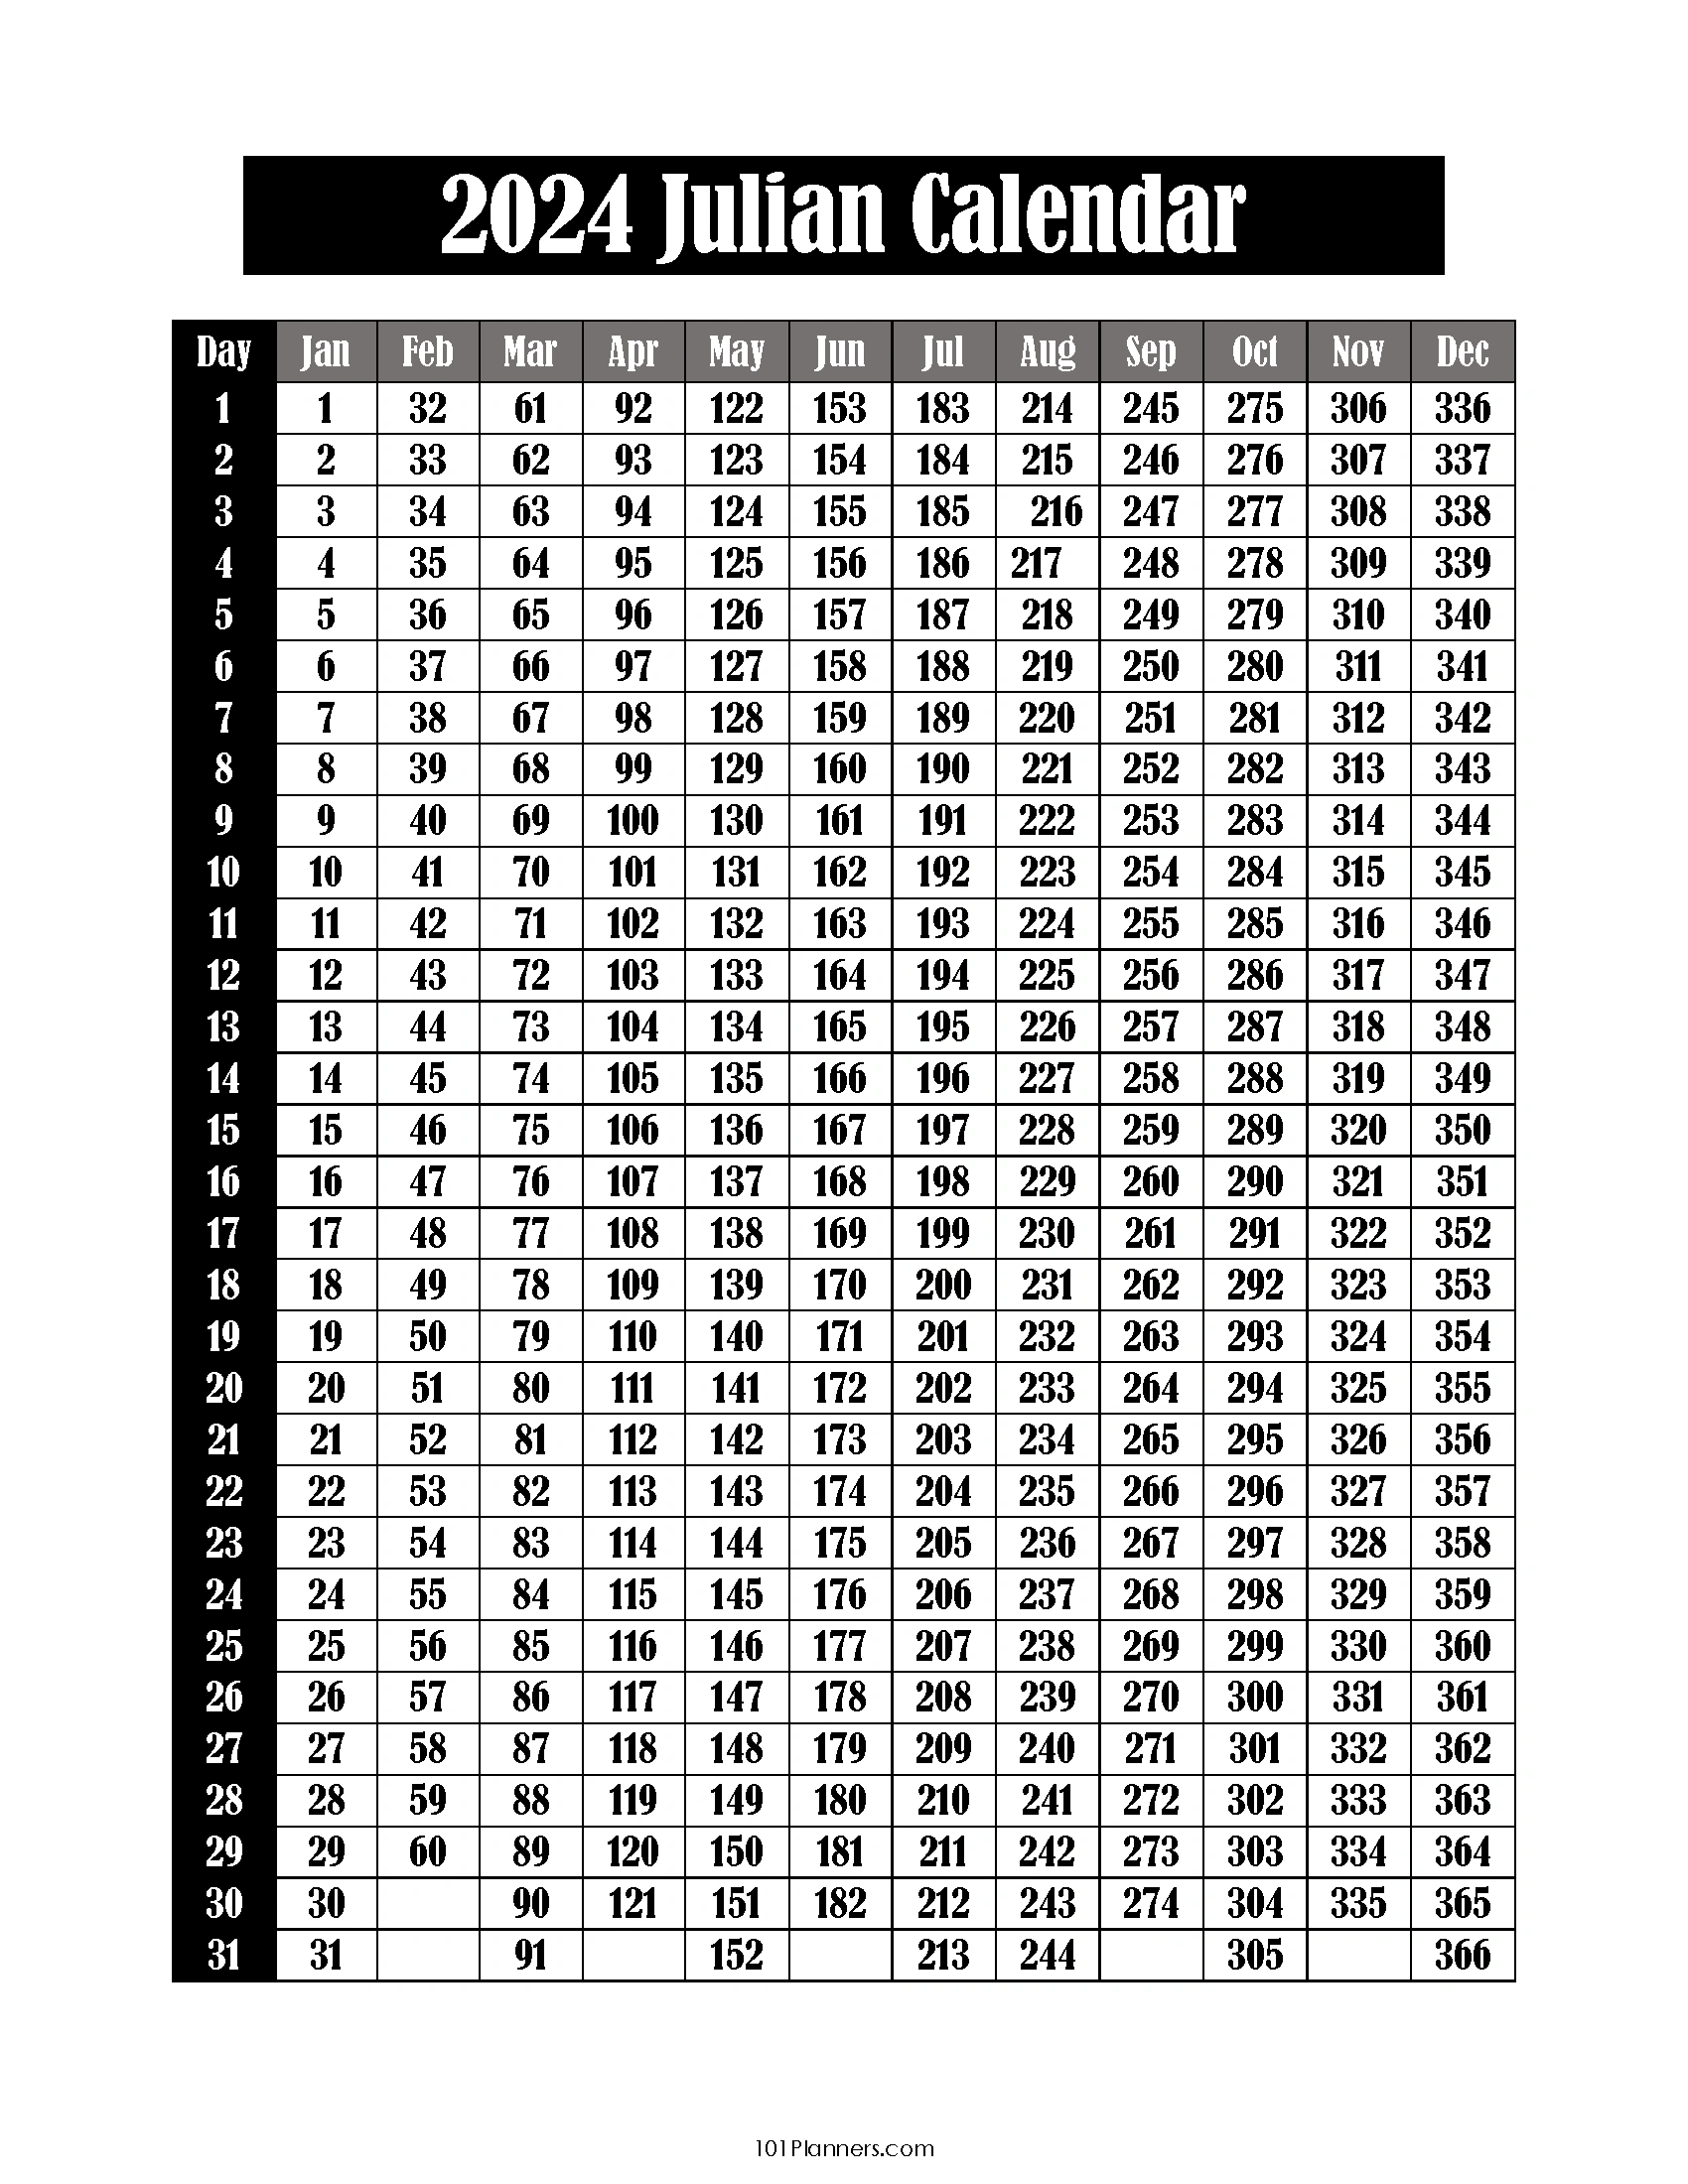 Free Printable Julian Calendar 2024-2032 | Julian Date Today inside Julian Date Calendar 2024 Printable Free